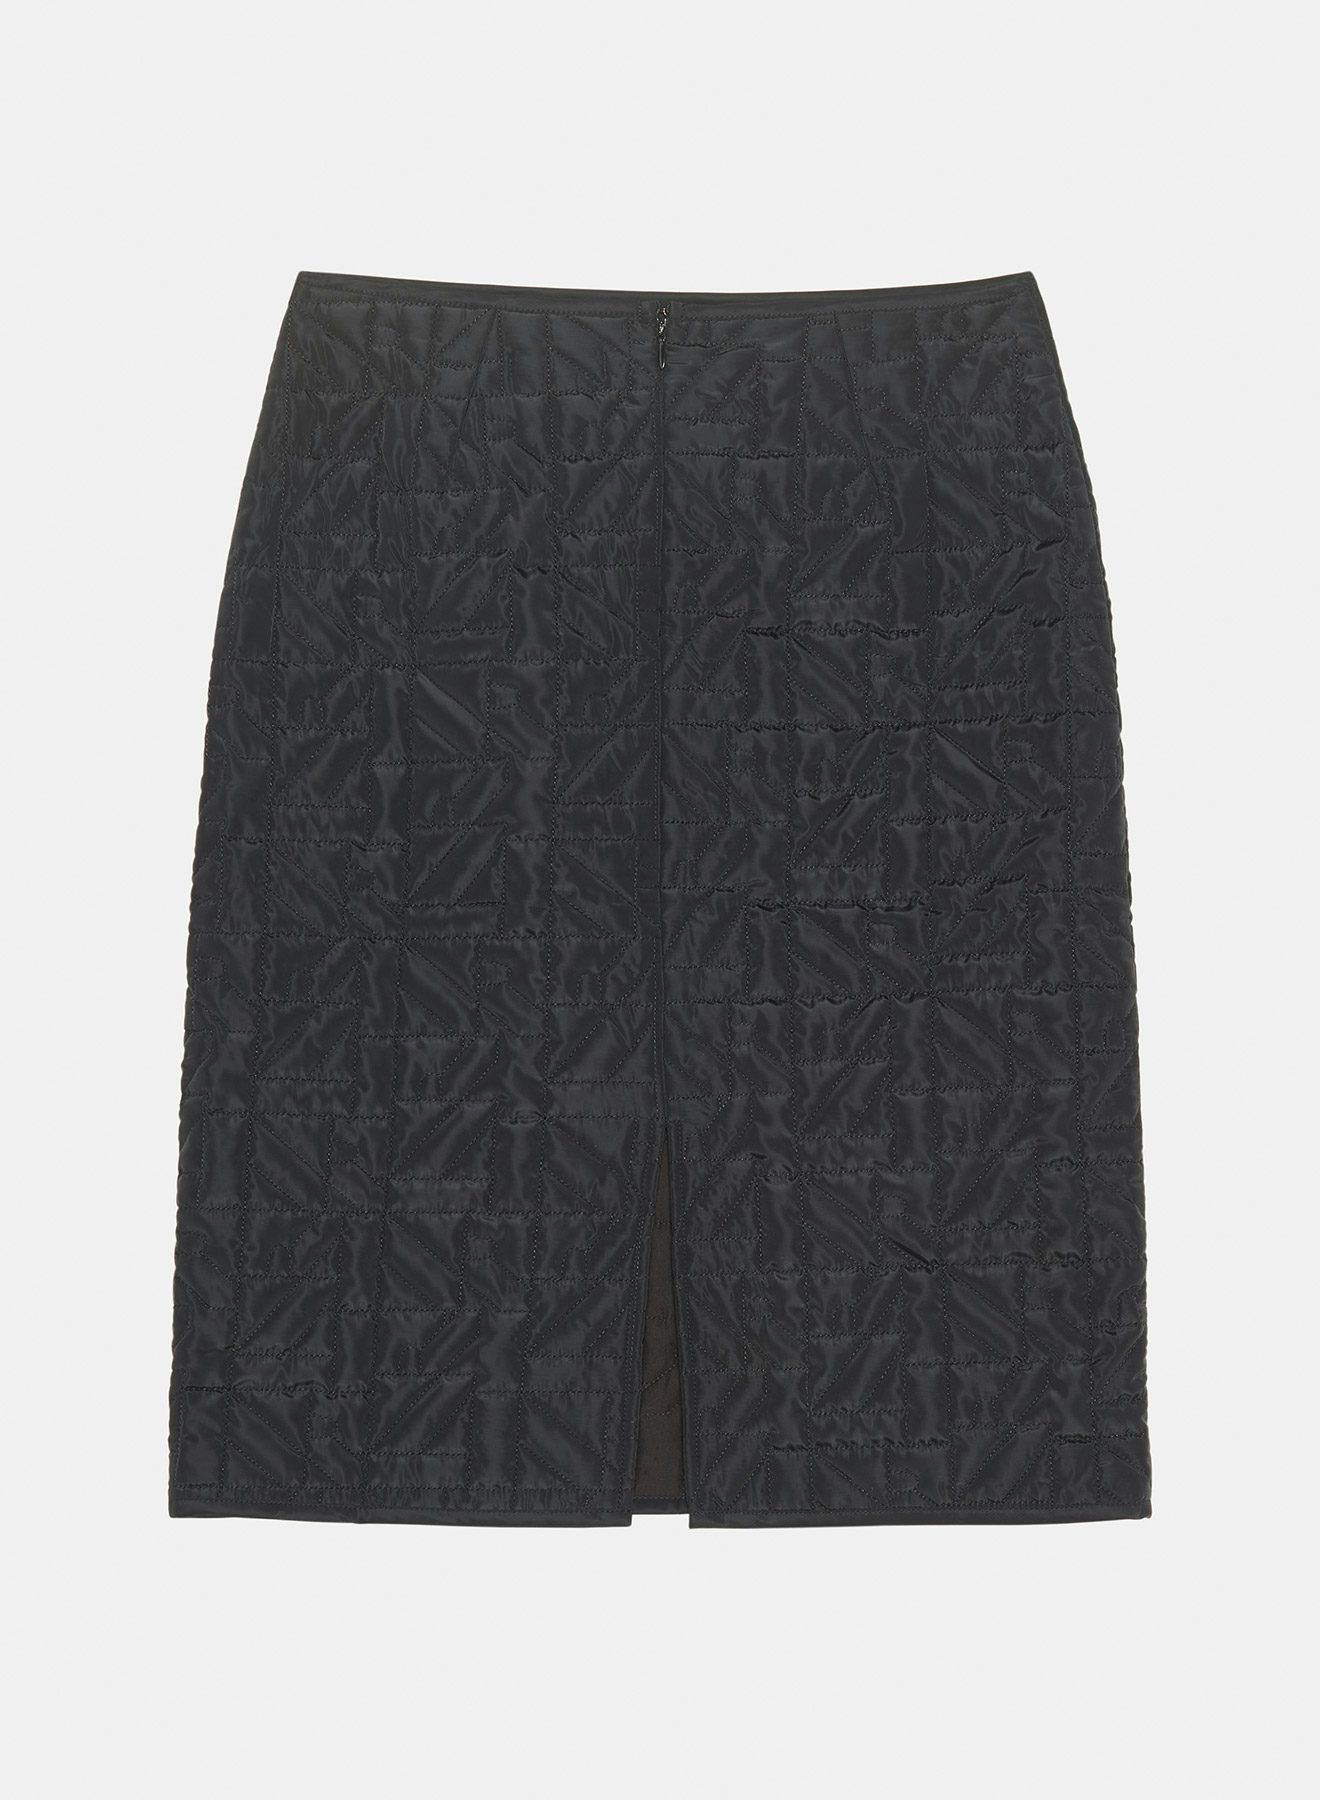 Quilted skirt black - Nina Ricci